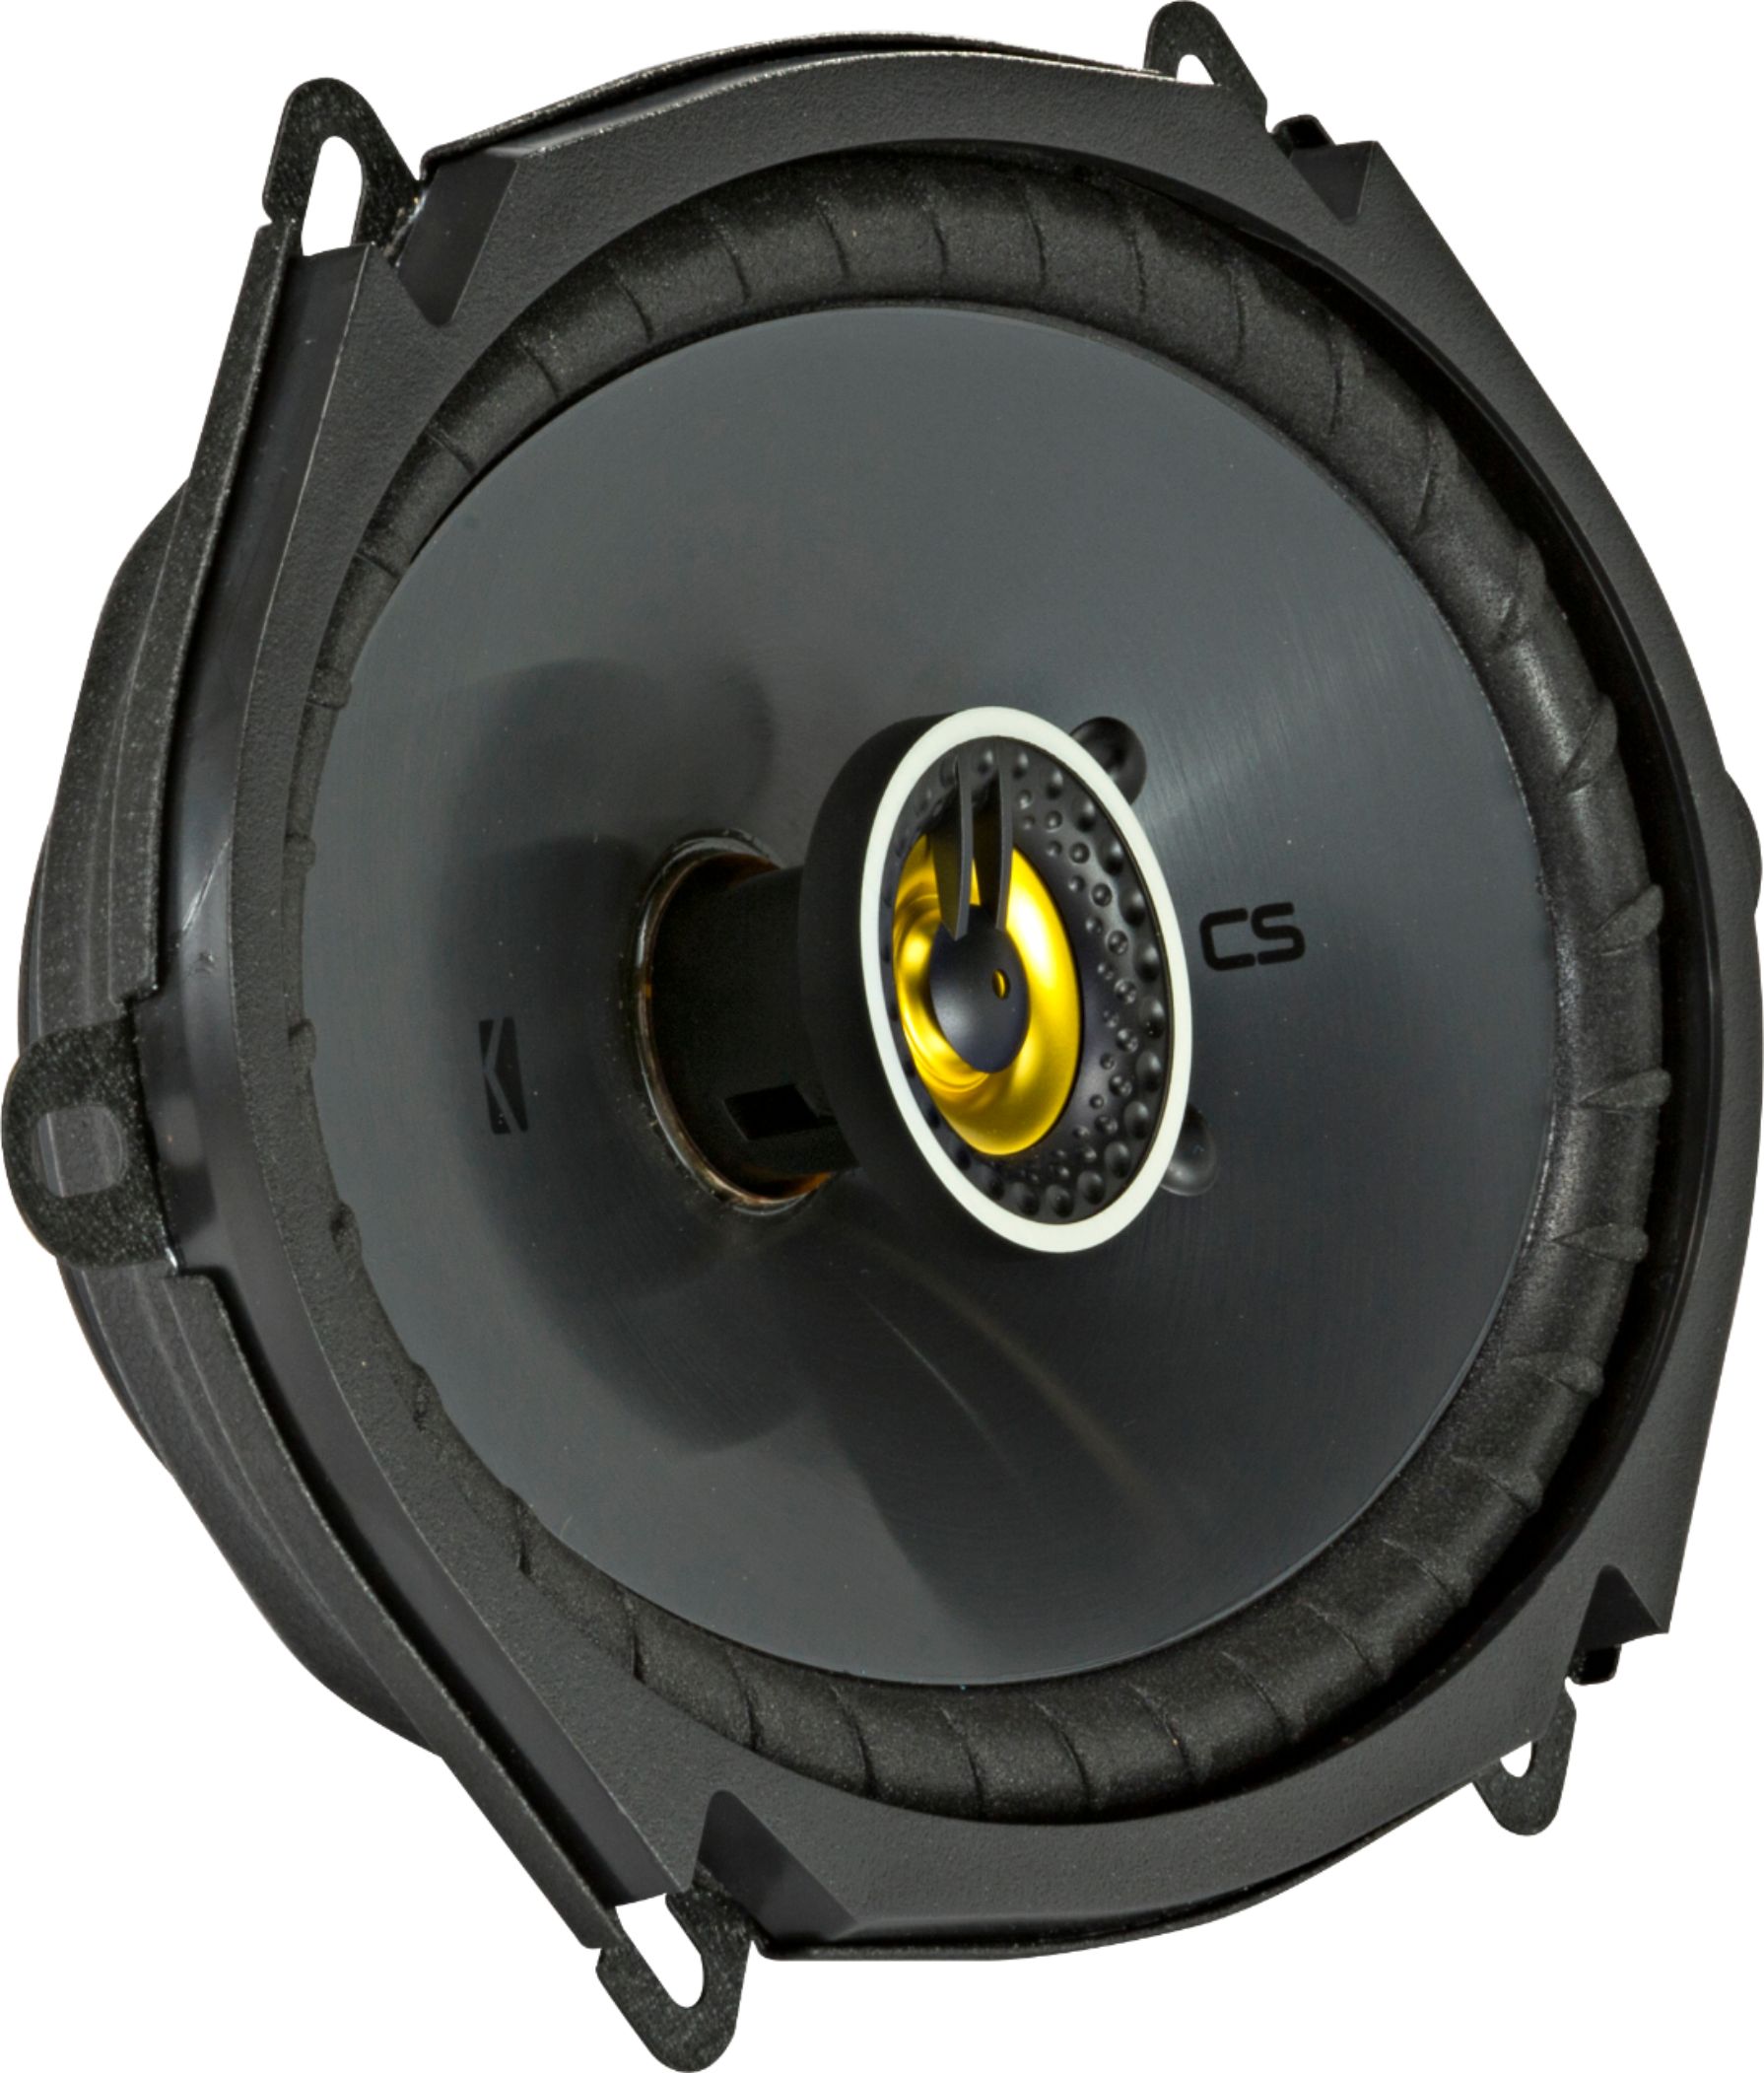 Angle View: KICKER - CS Series 6" x 8" 2-Way Car Speakers with Polypropylene Cones (Pair) - Yellow/Black